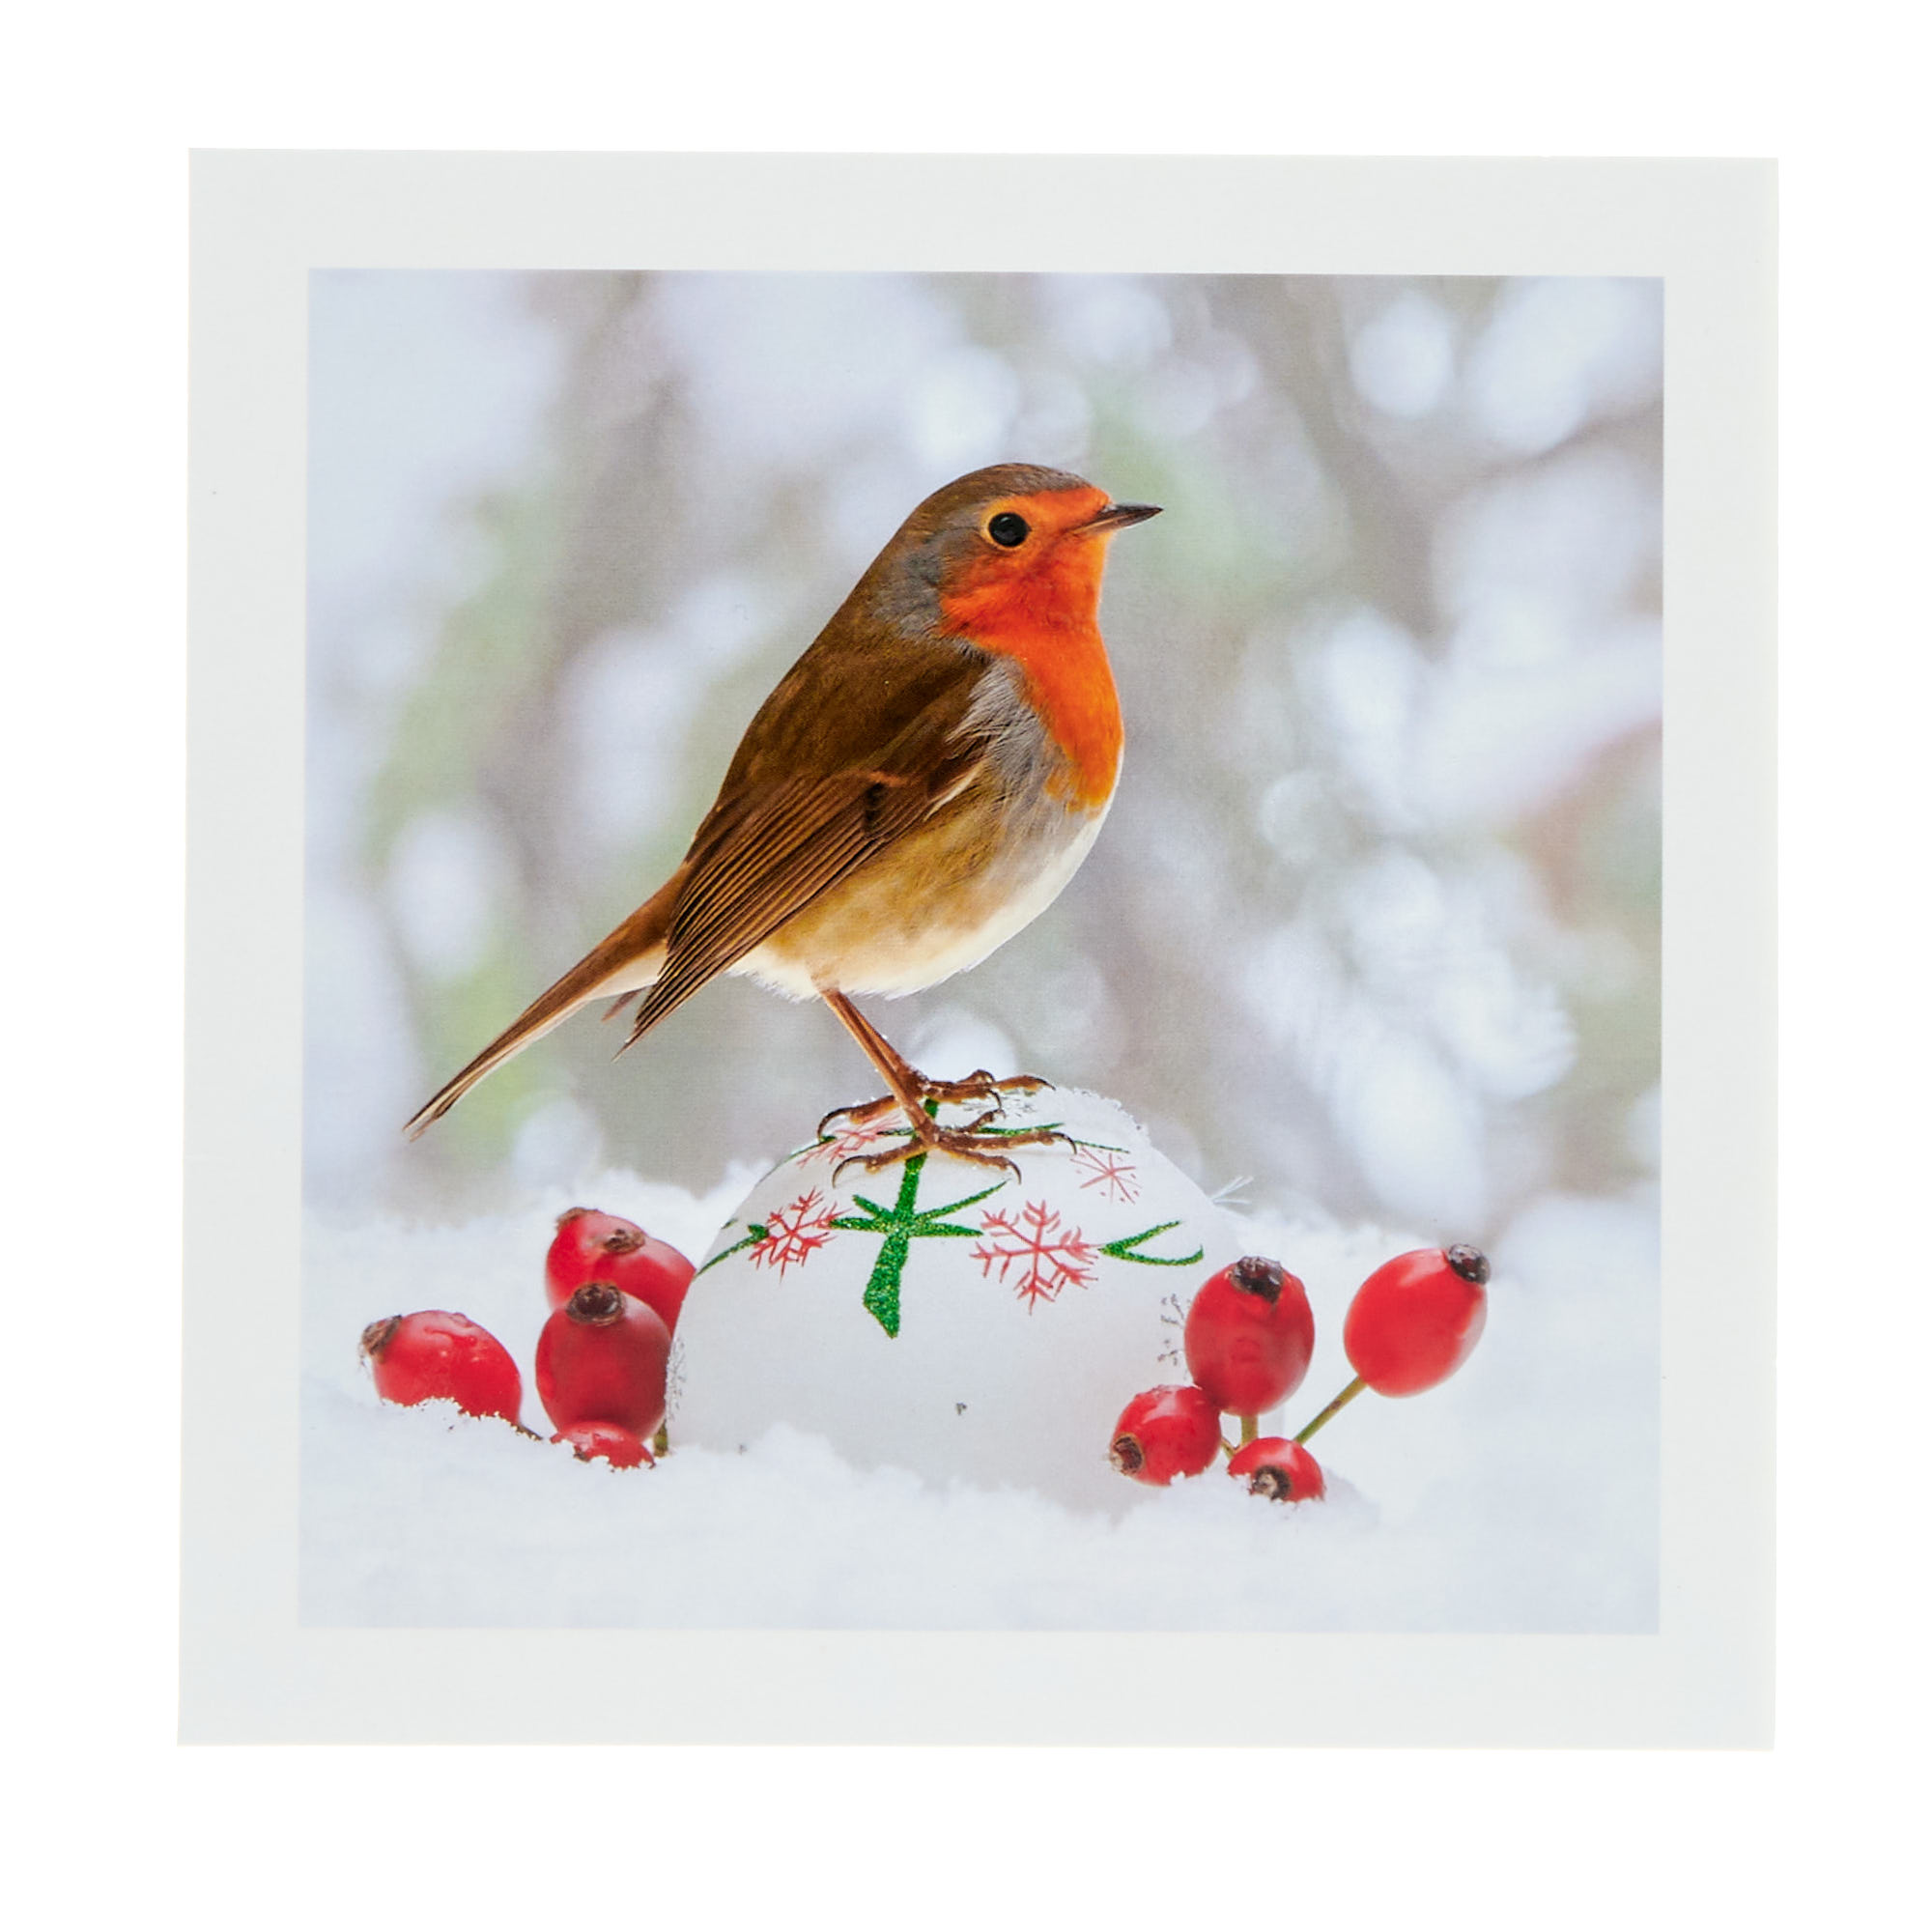 18 Charity Christmas Cards - Deer & Robin (2 Designs)